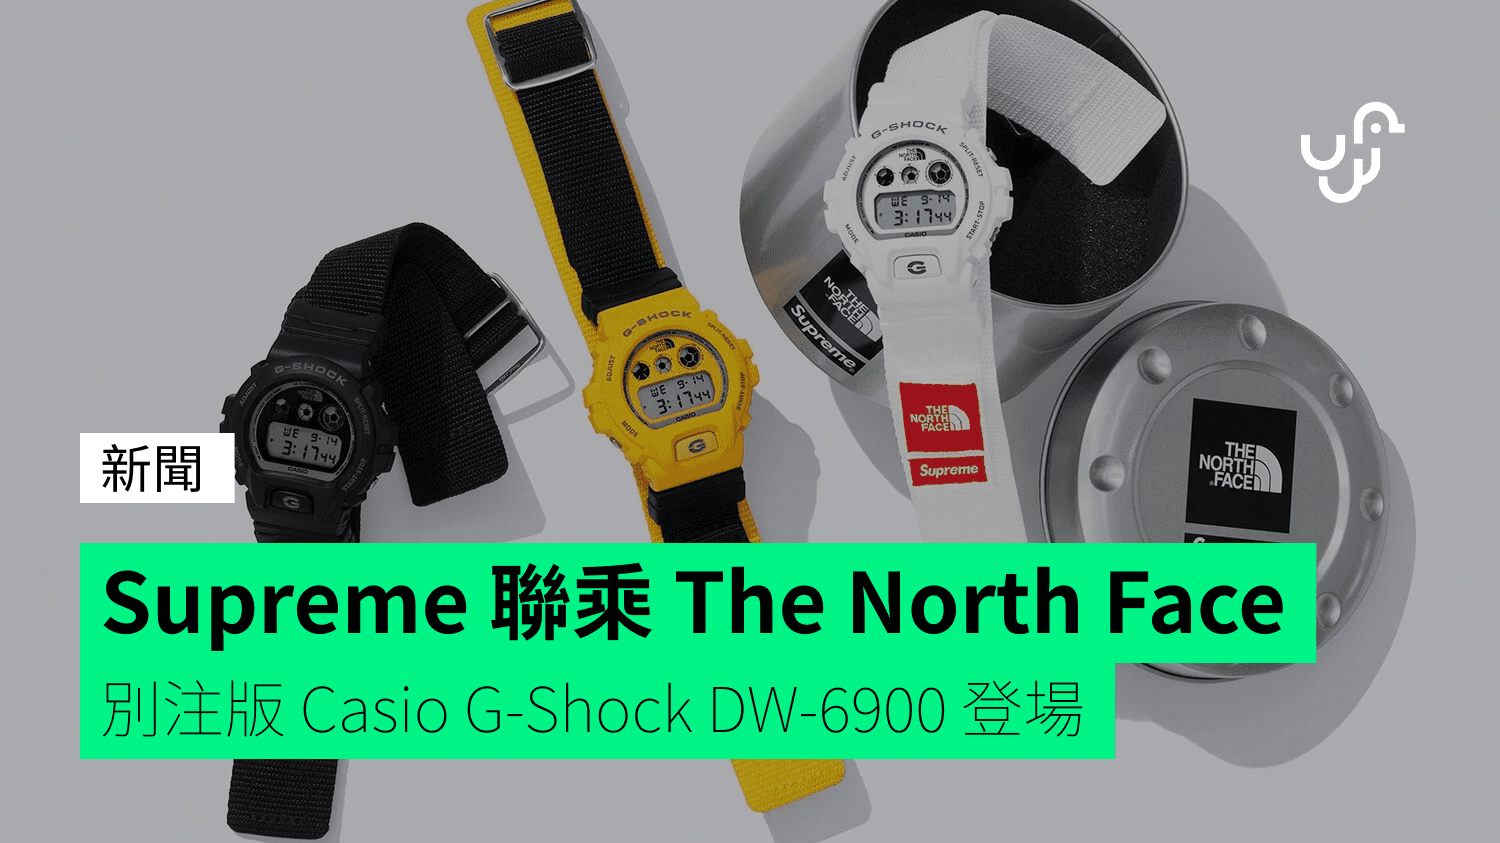 Supreme 聯乘The North Face 別注版Casio G-Shock DW-6900 登場- 香港